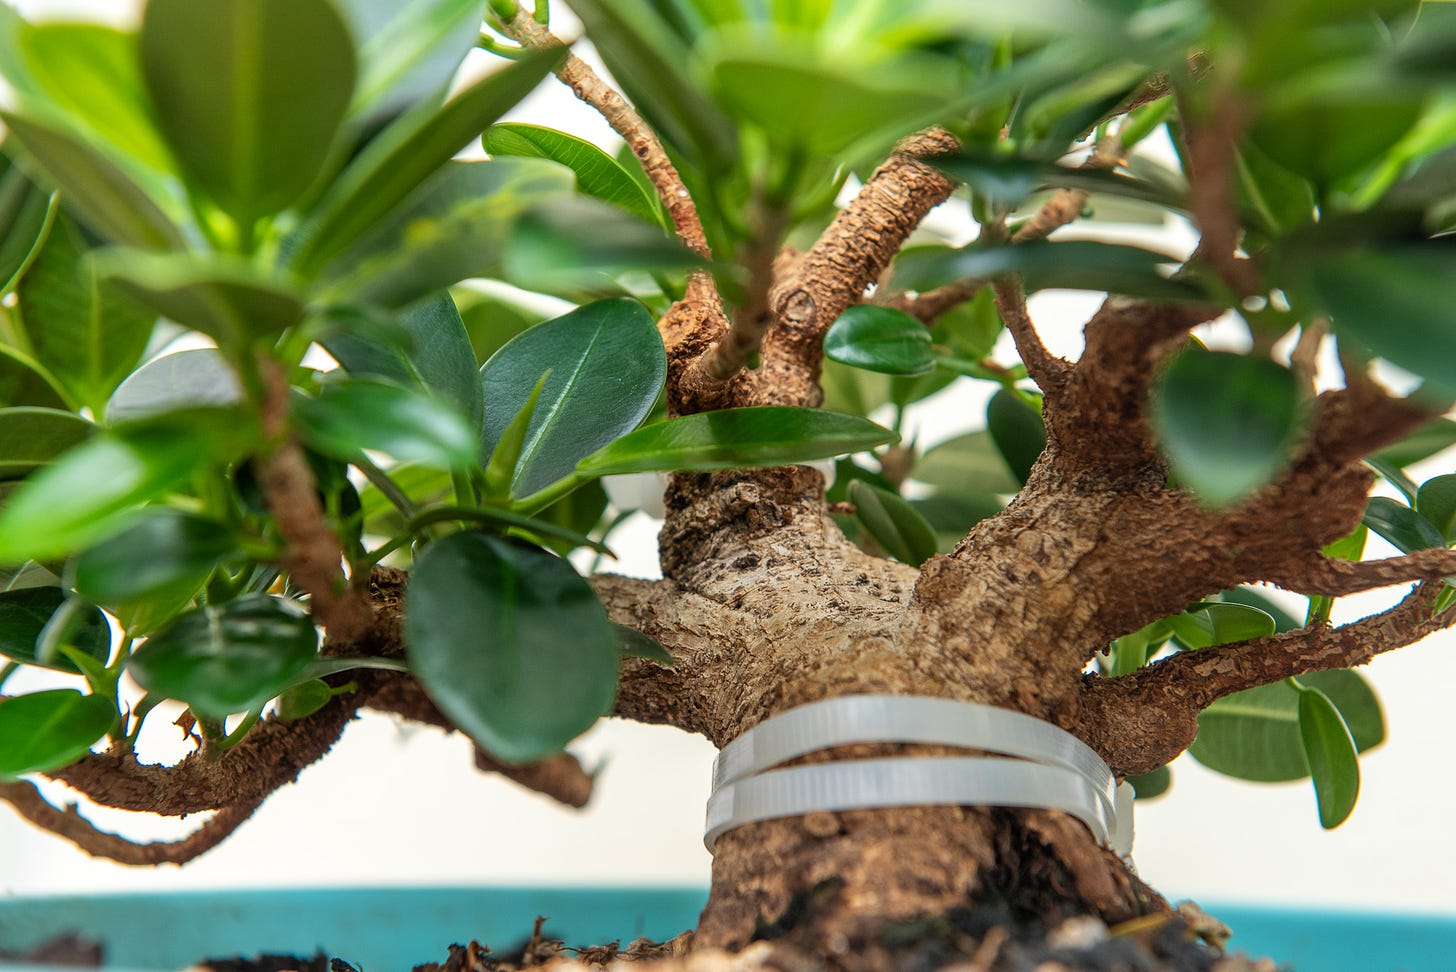 ID: Close up view of ficus bonsai